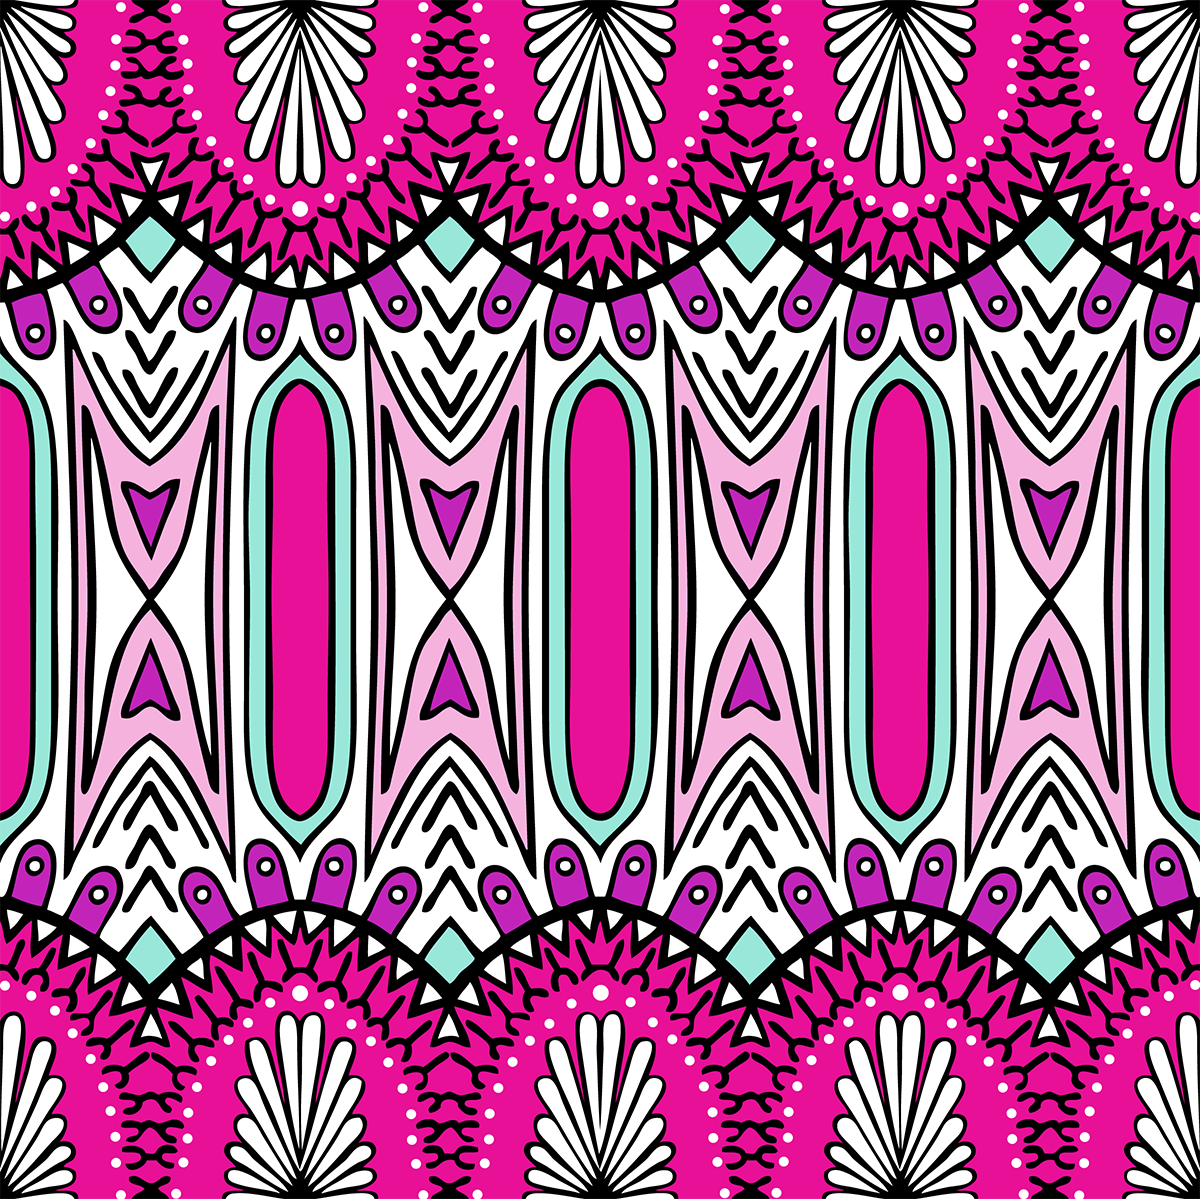 McKnight-NOUVEAU-Pattern-09-pink-purp-green copy.png